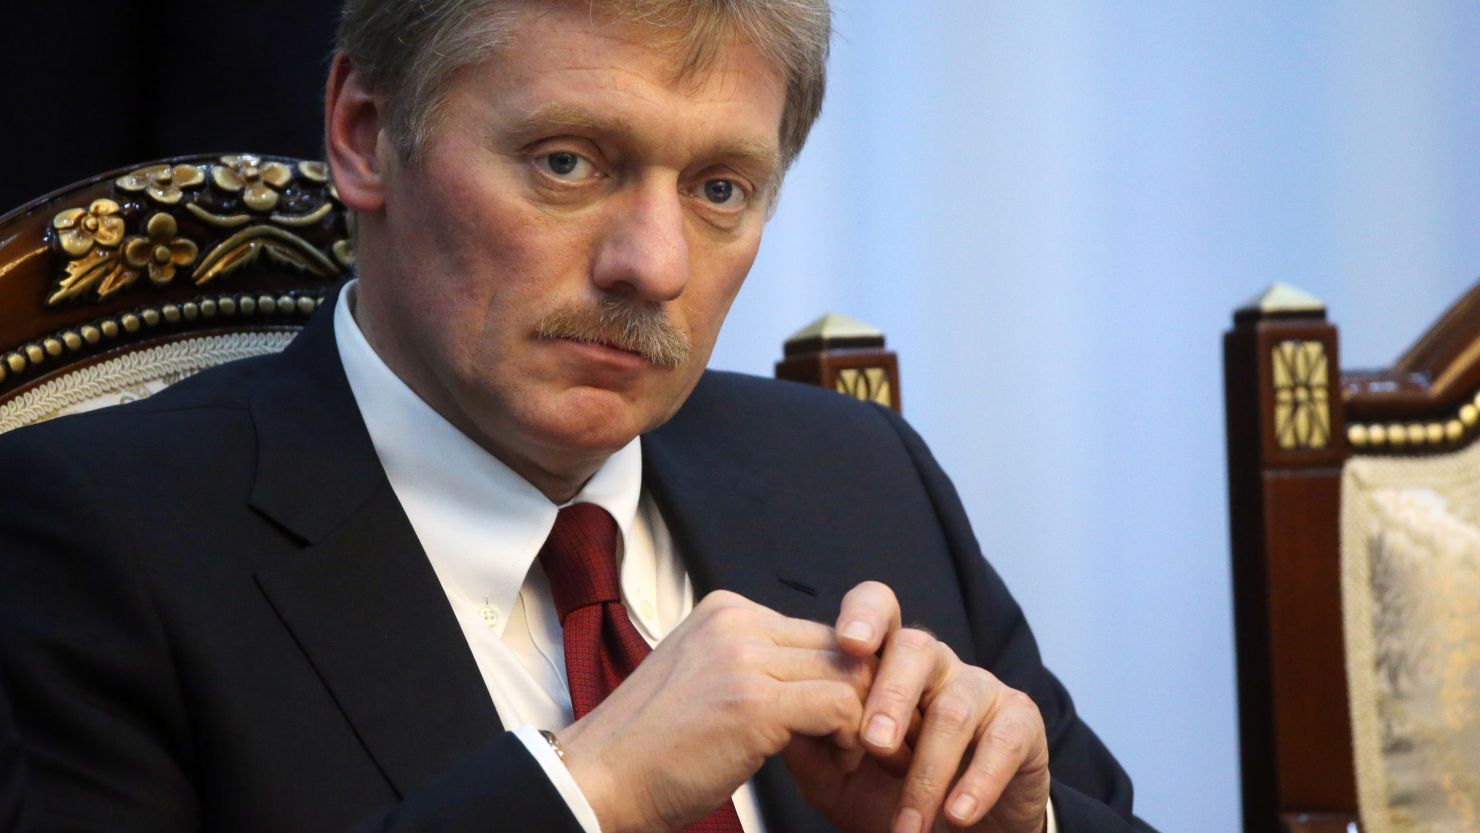 Dmitry Peskov, the spokesman for Russian President Vladimir Putin